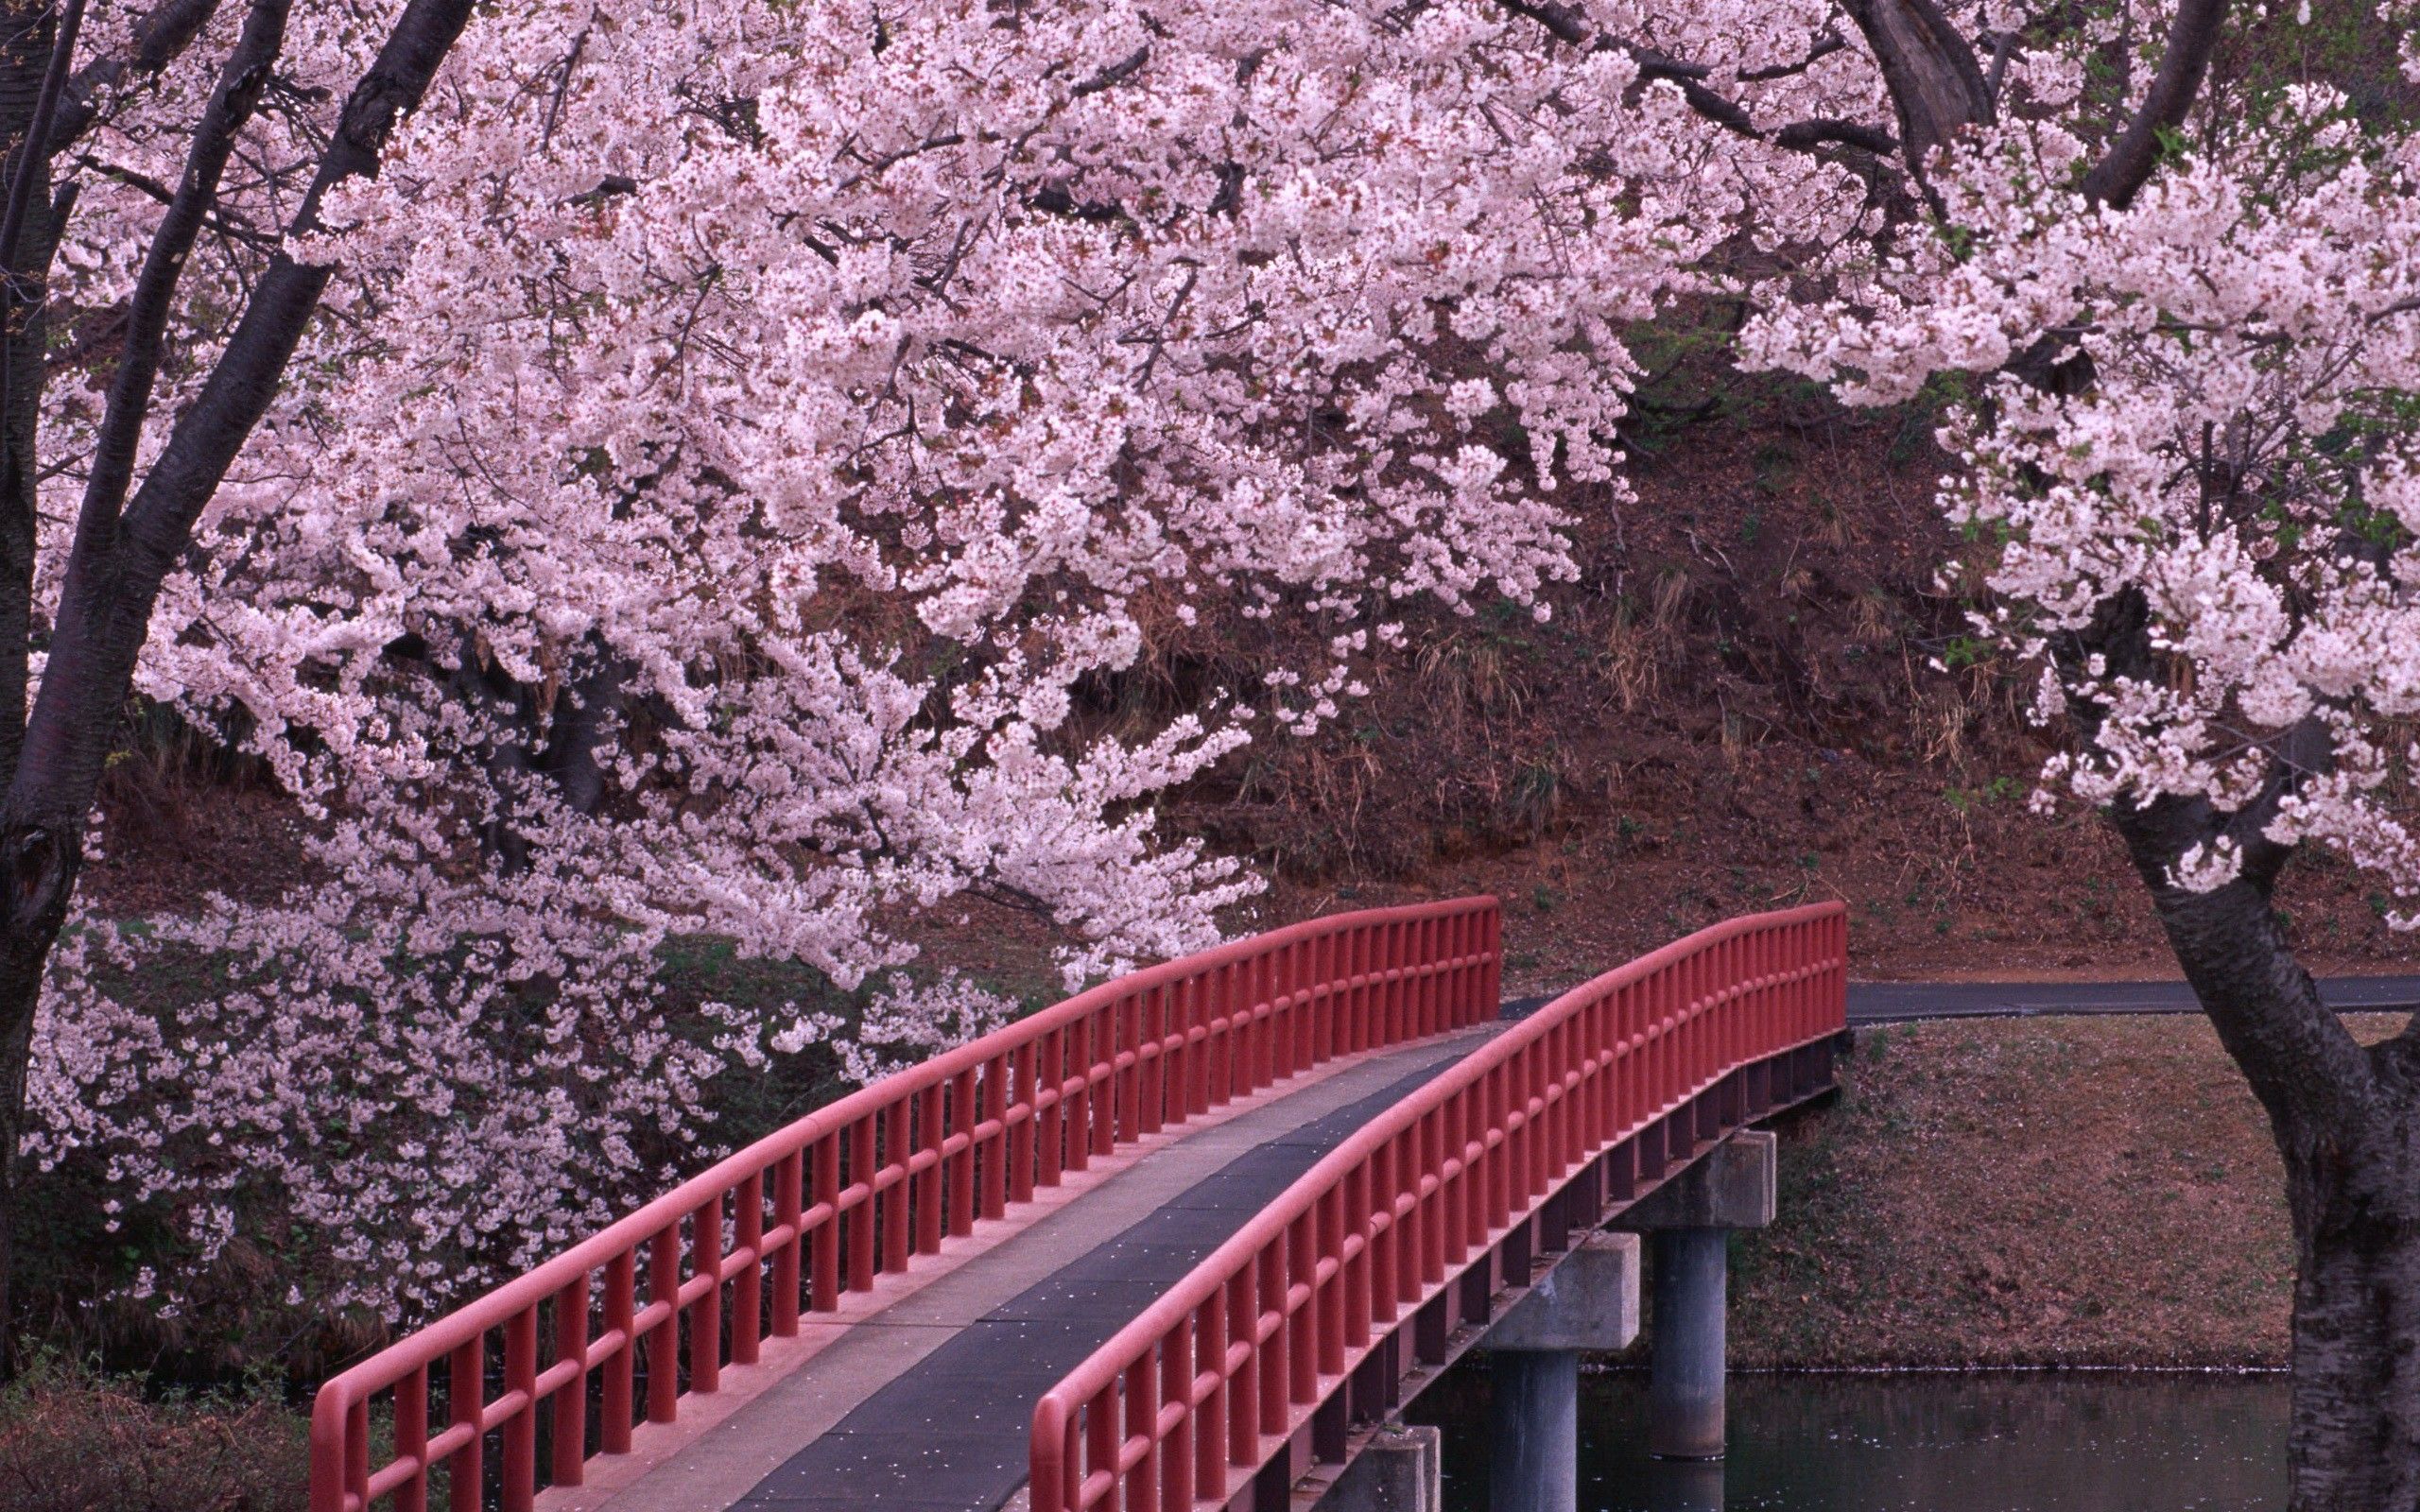 Flowers Landscapes Cherry Blossoms HD Wallpaper 2560x1600PX